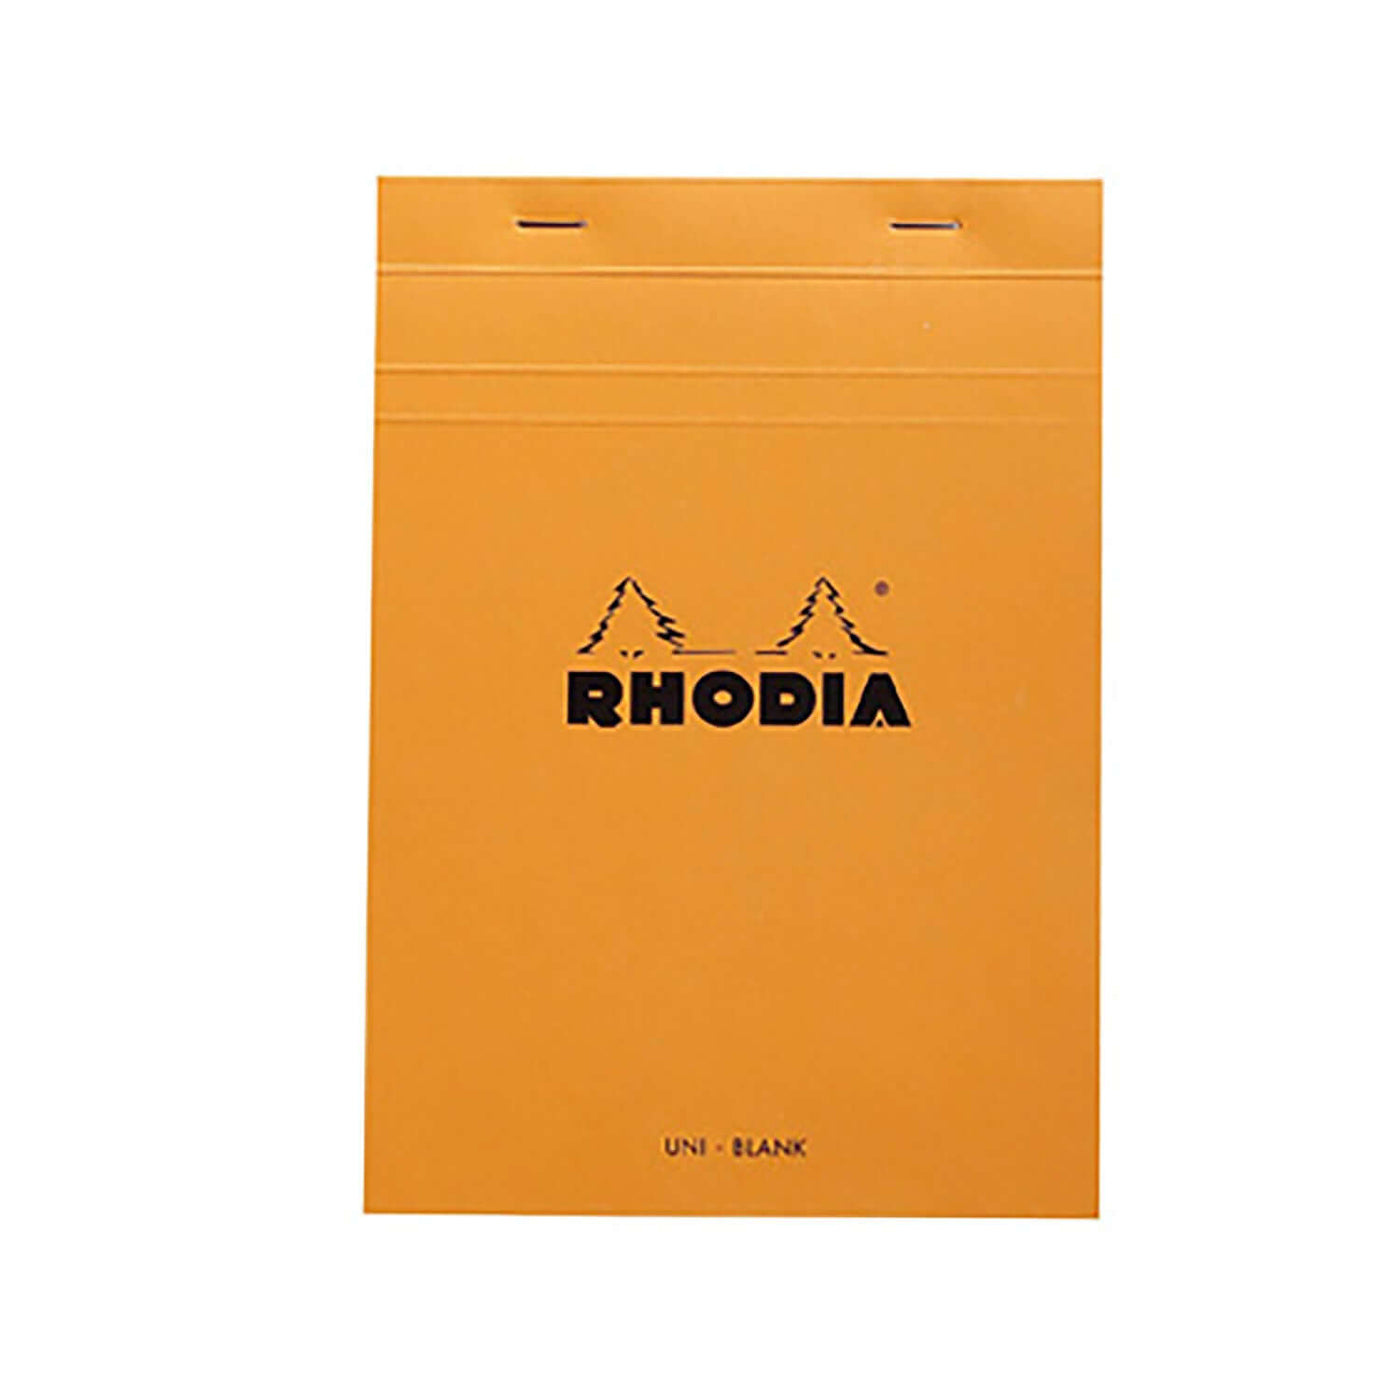 Rhodia Basics Notepad, Orange - Top Stapled 4